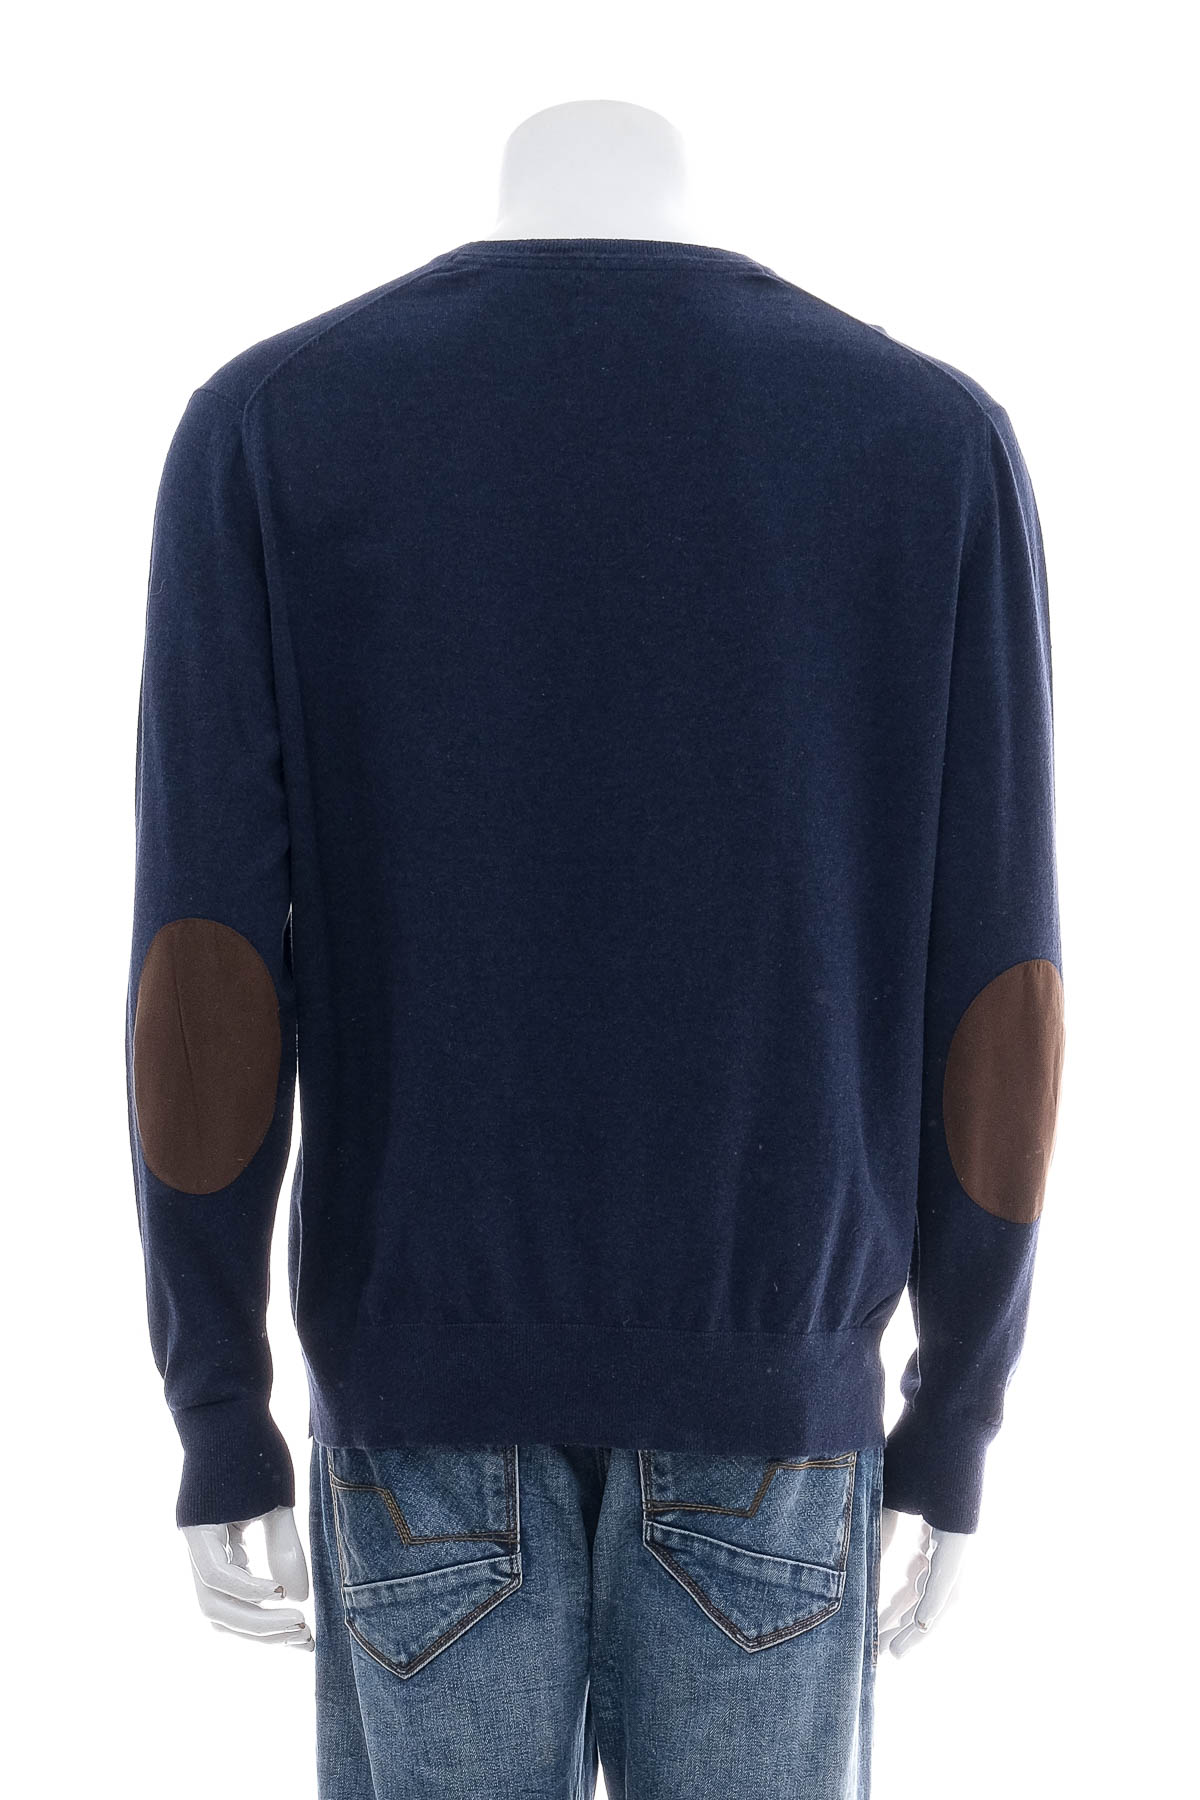 Men's sweater - FRANCO BETTONI - 1